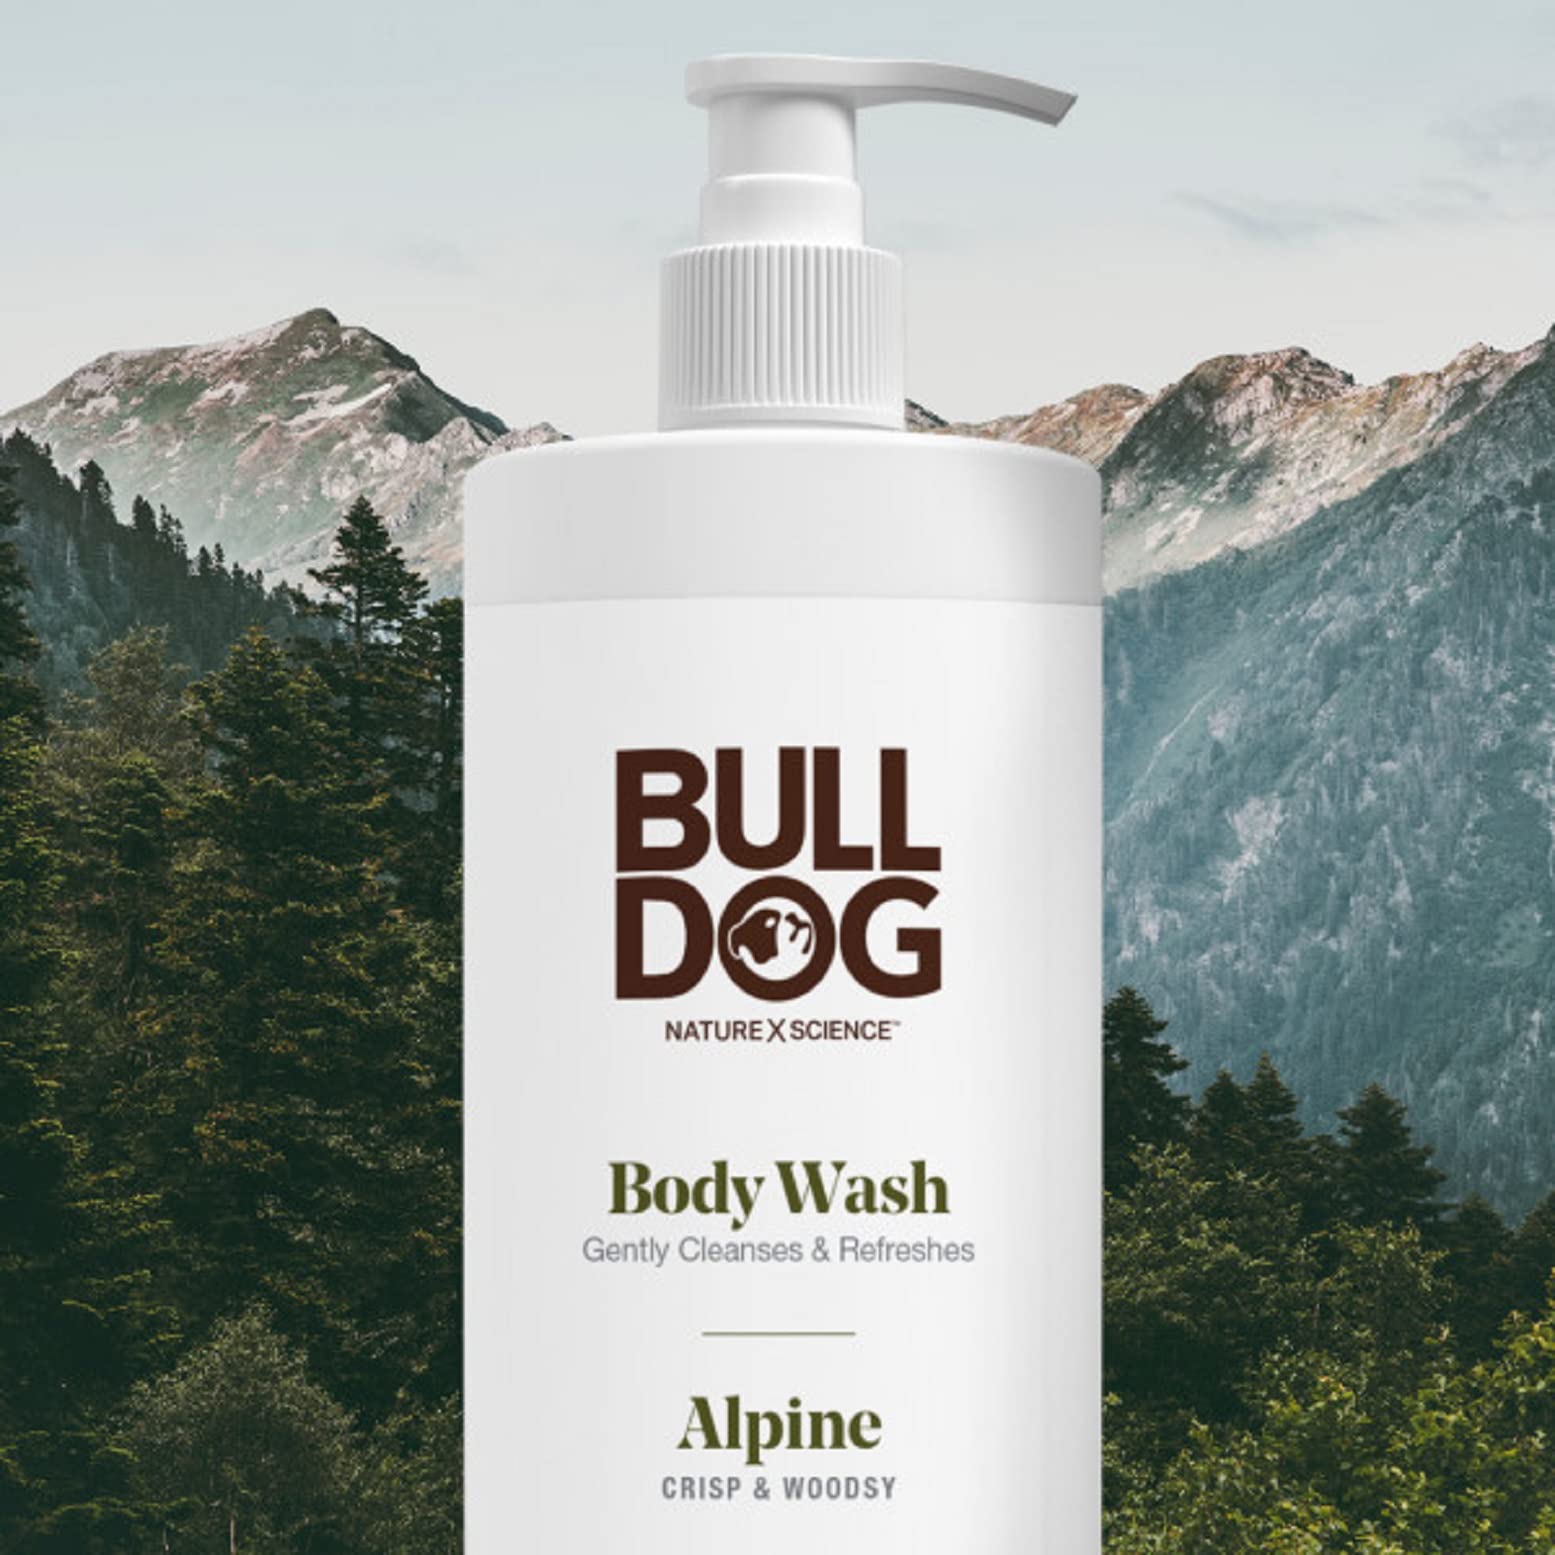 BULLDOG Mens Skincare and Grooming Body Wash, Alpine, 16.9 Fluid Ounce